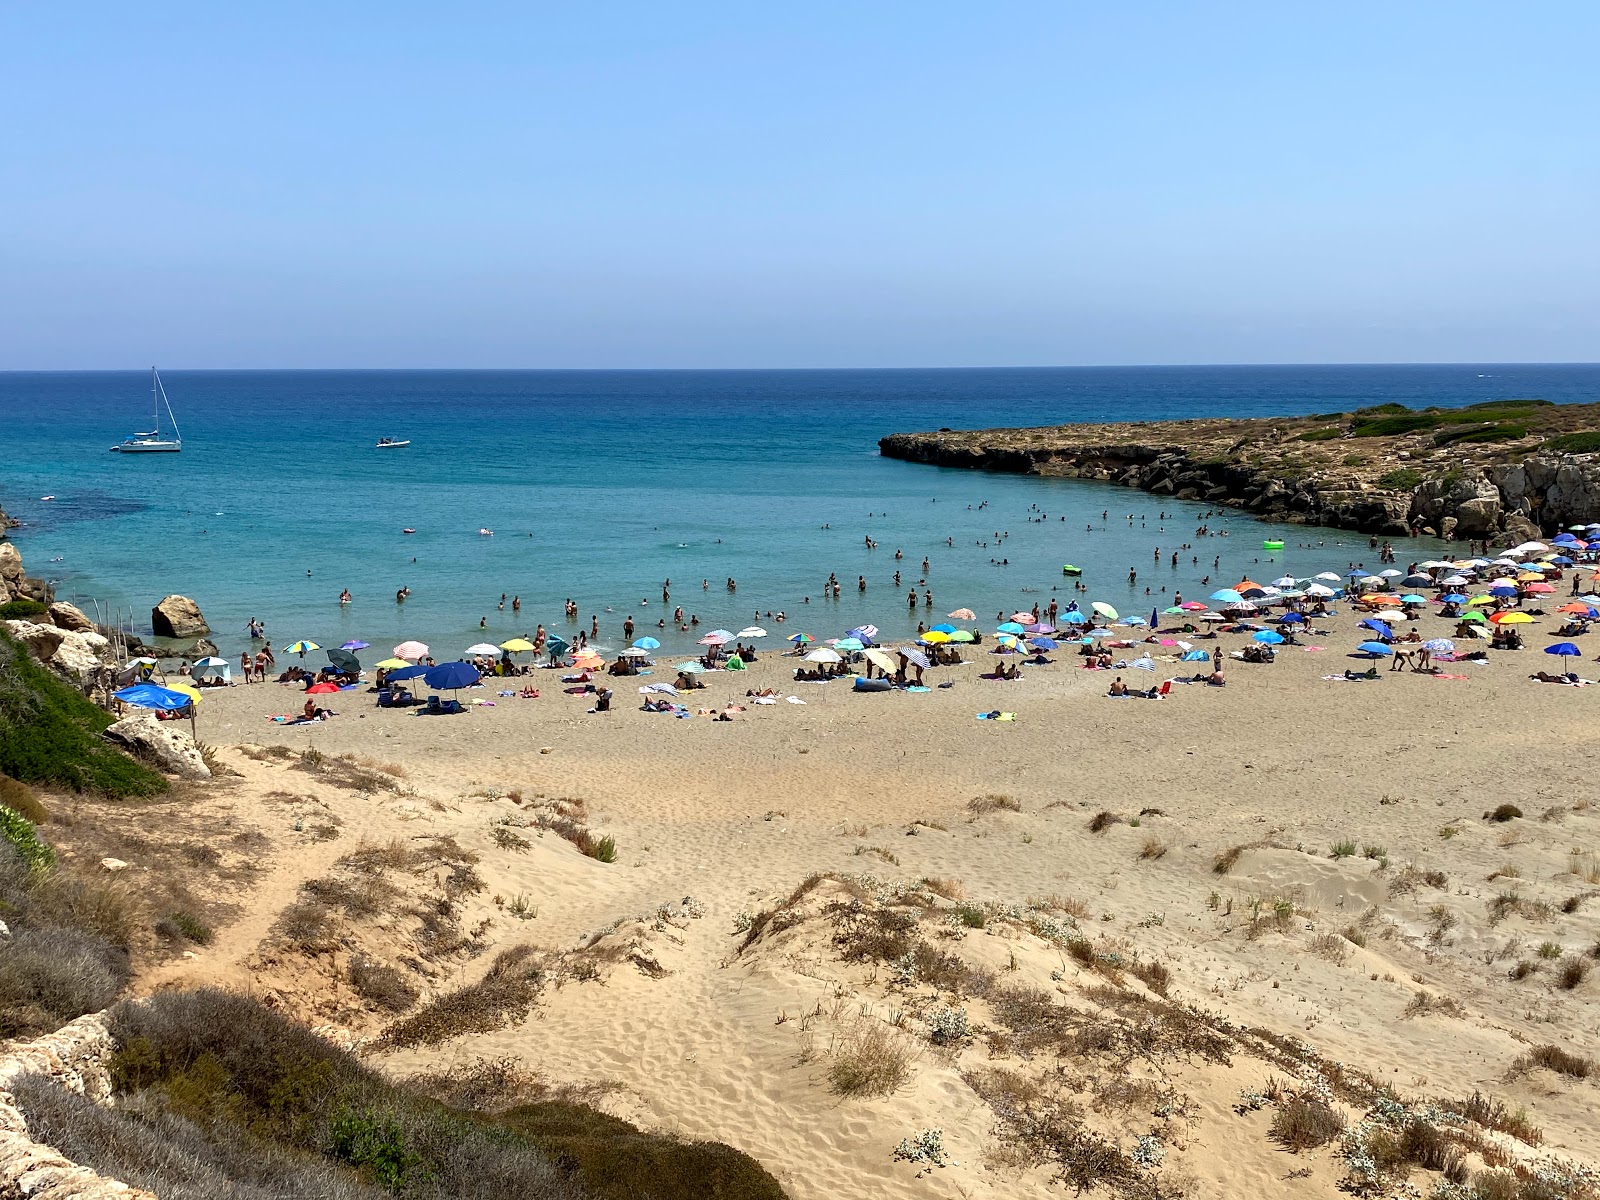 Foto av Spiaggia di Calamosche med brunsand yta